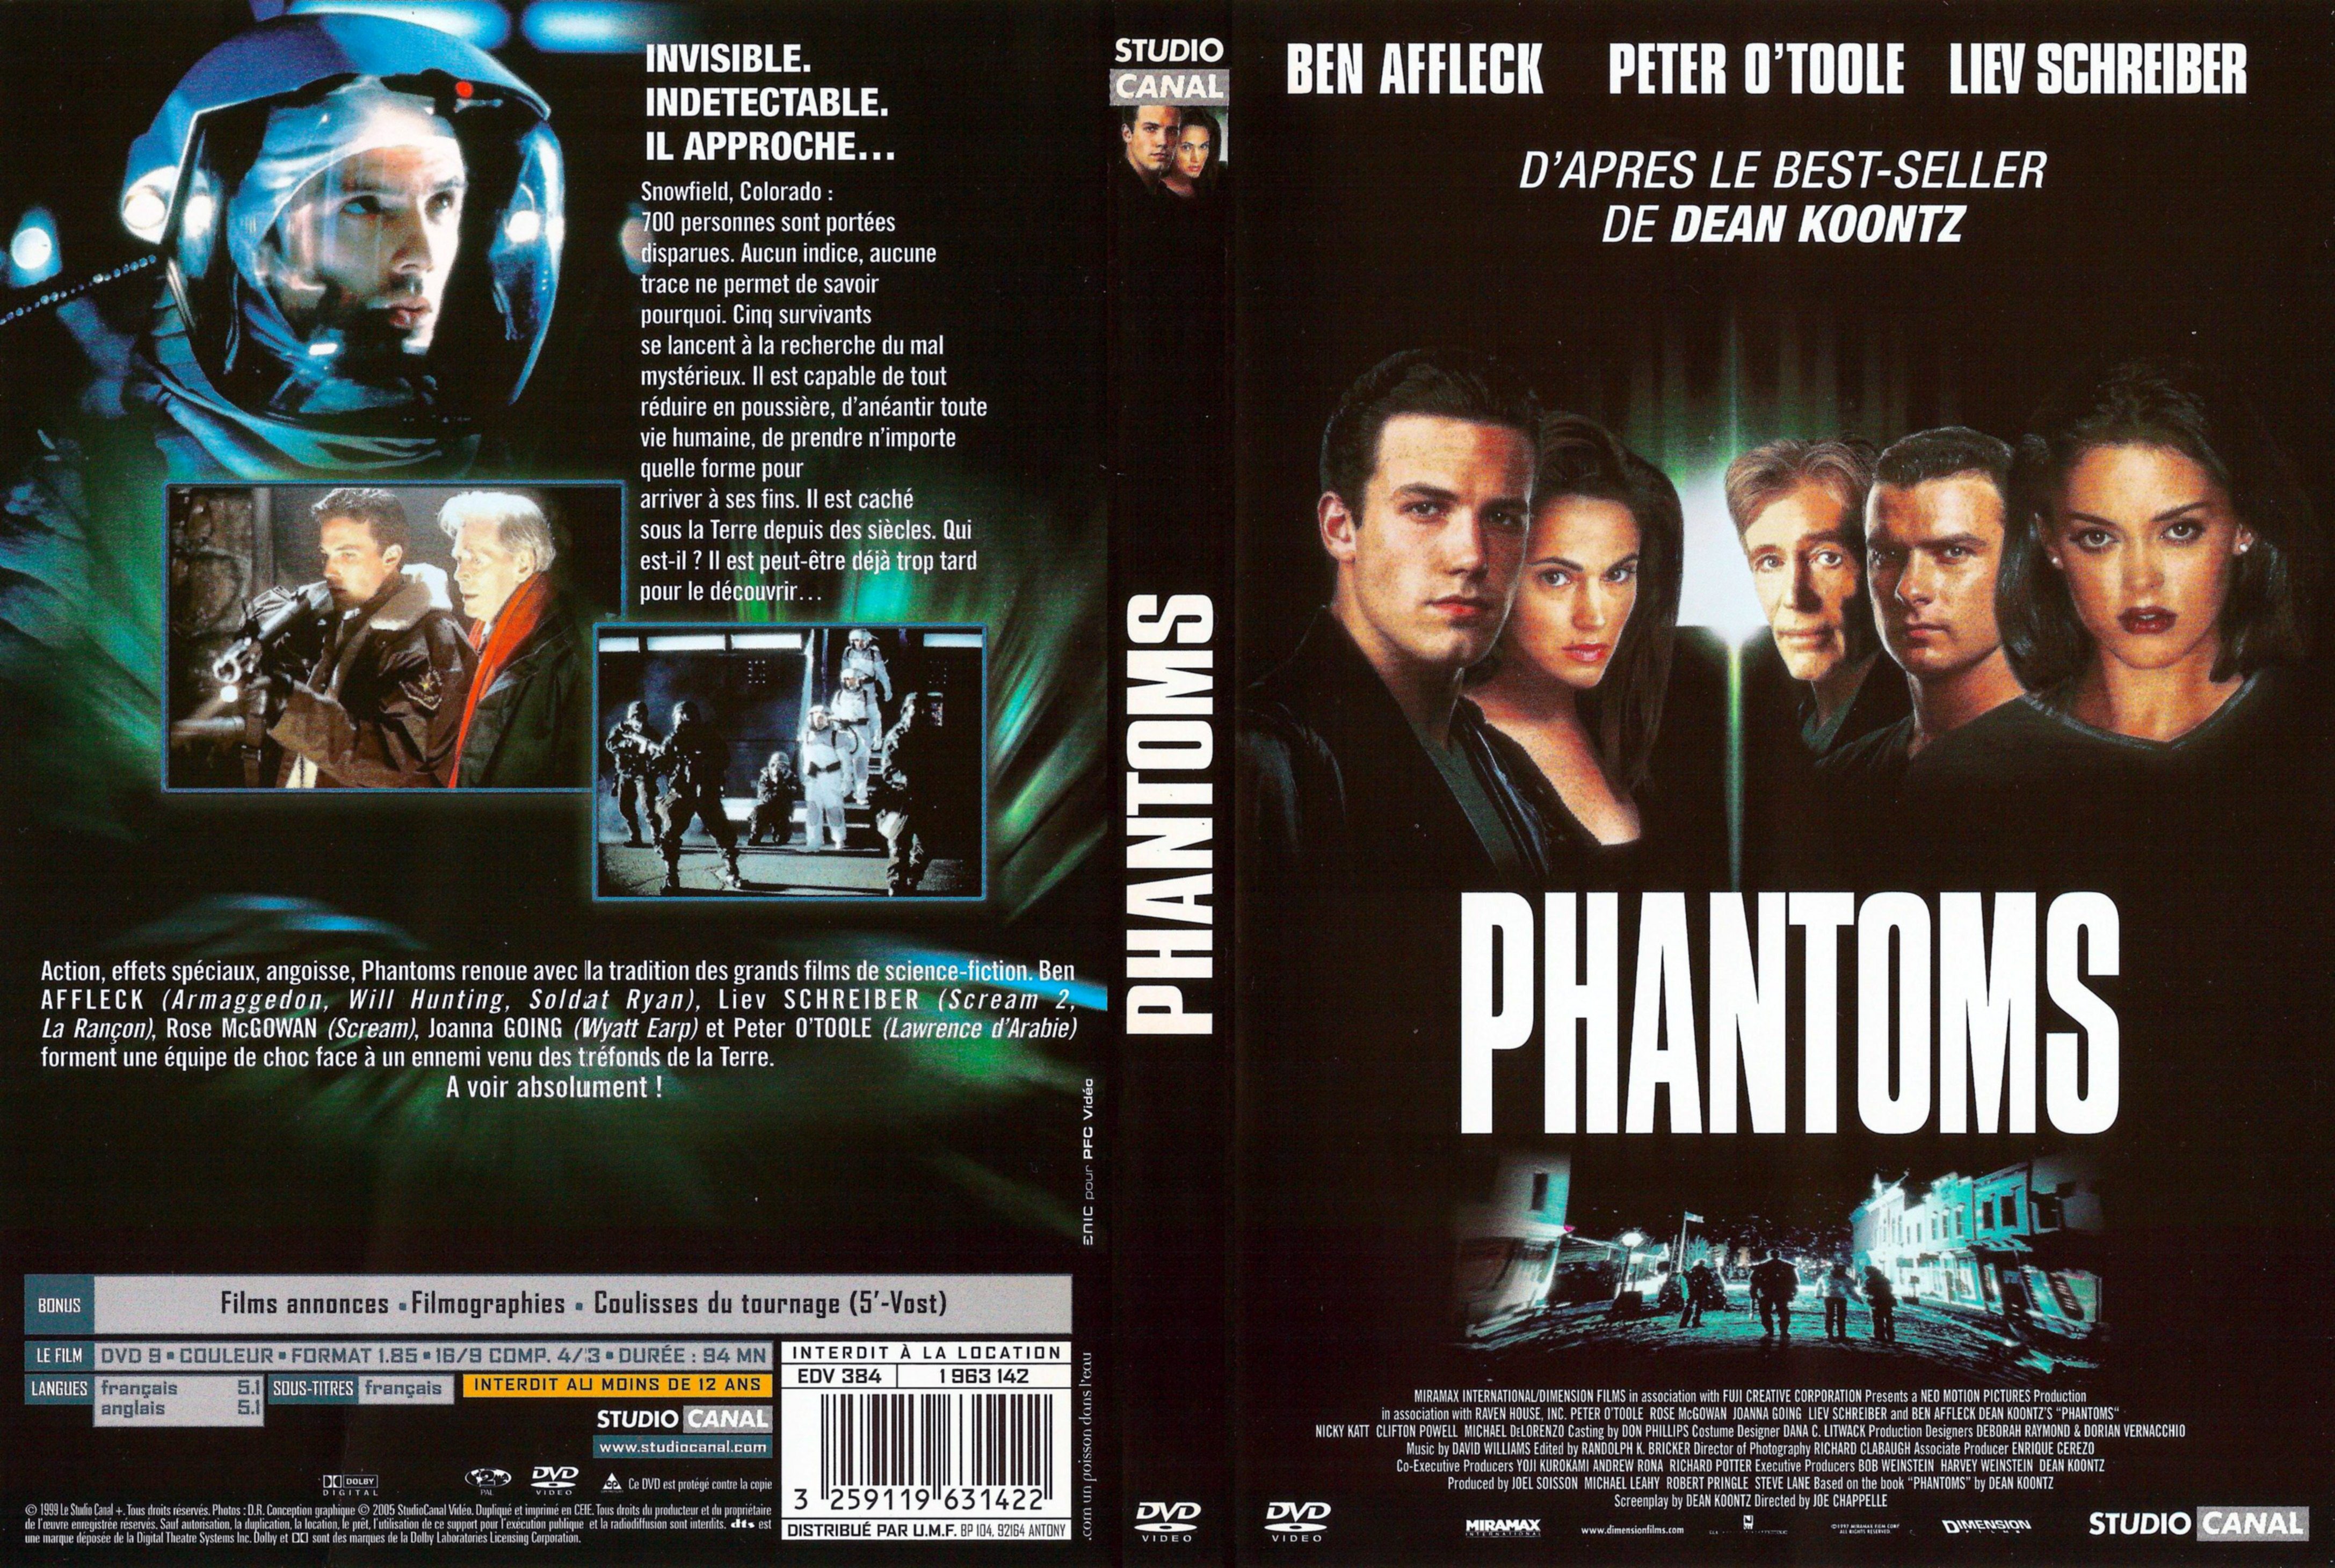 Jaquette DVD Phantoms v4